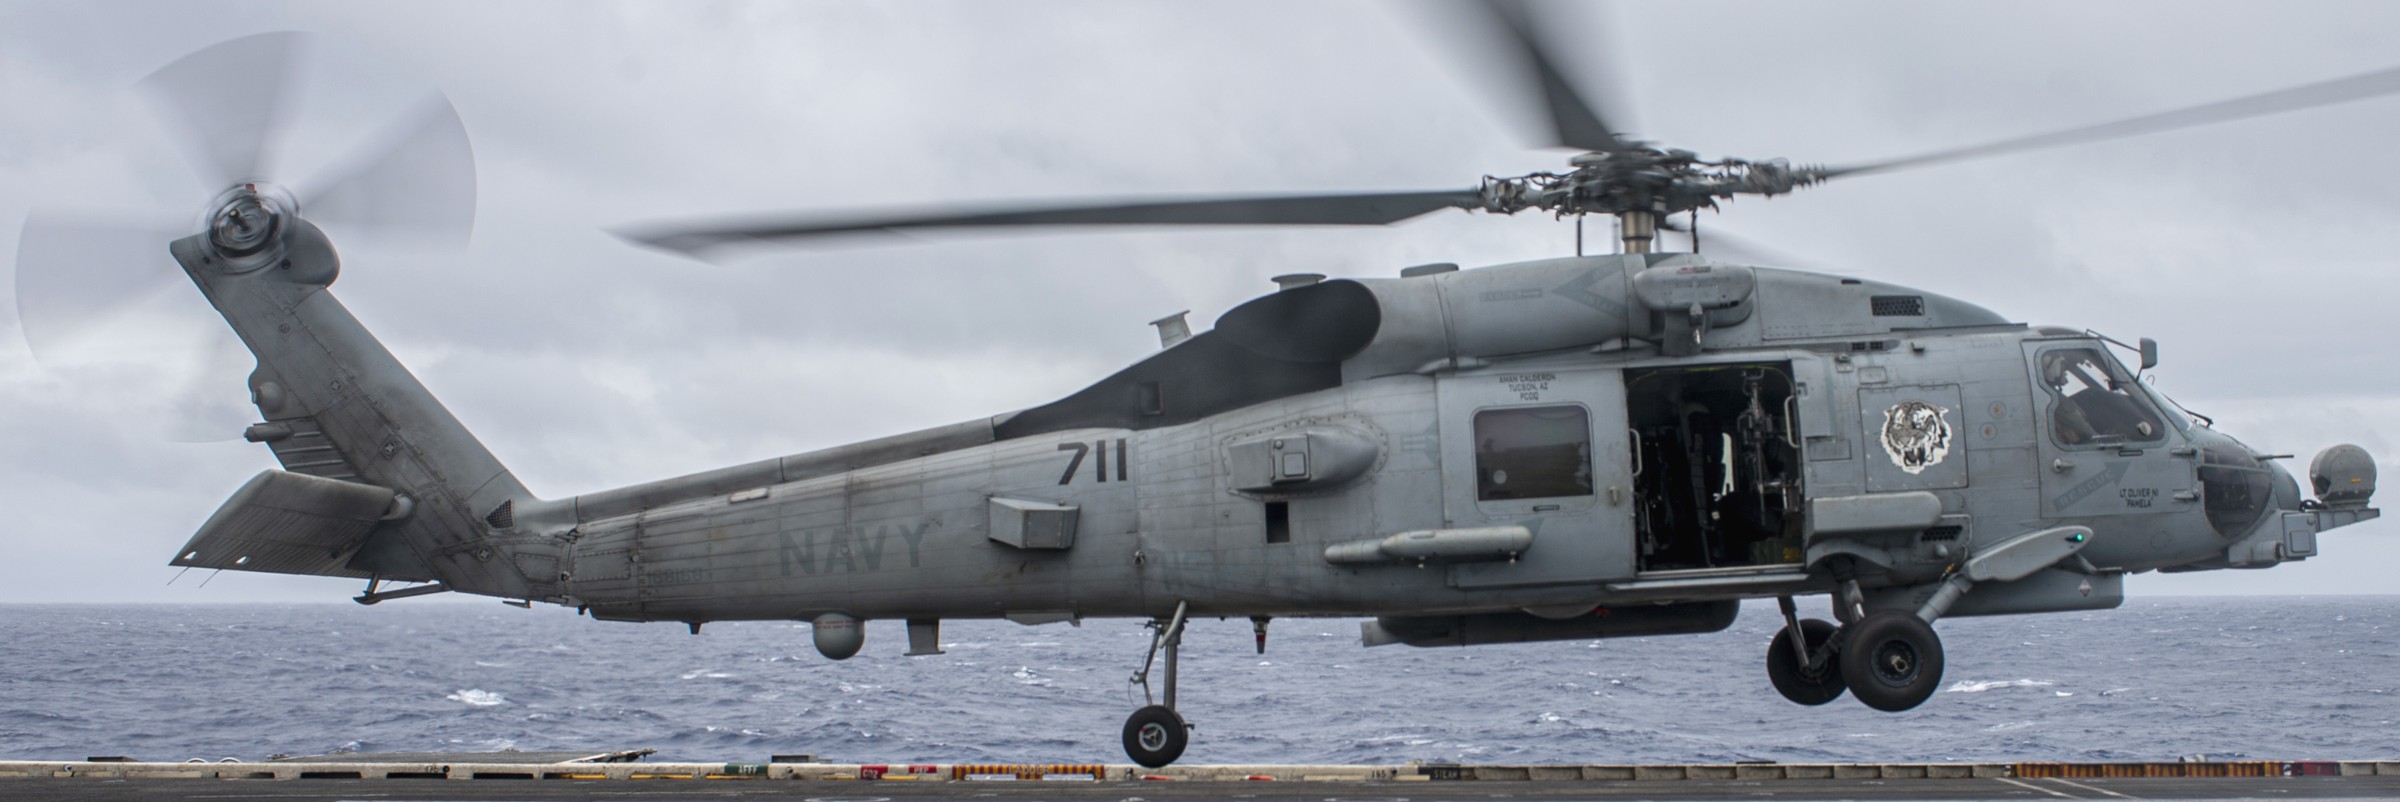 hsm-73 battlecats helicopter maritime strike squadron mh-60r seahawk cvw-17 cvn-68 uss nimitz 96